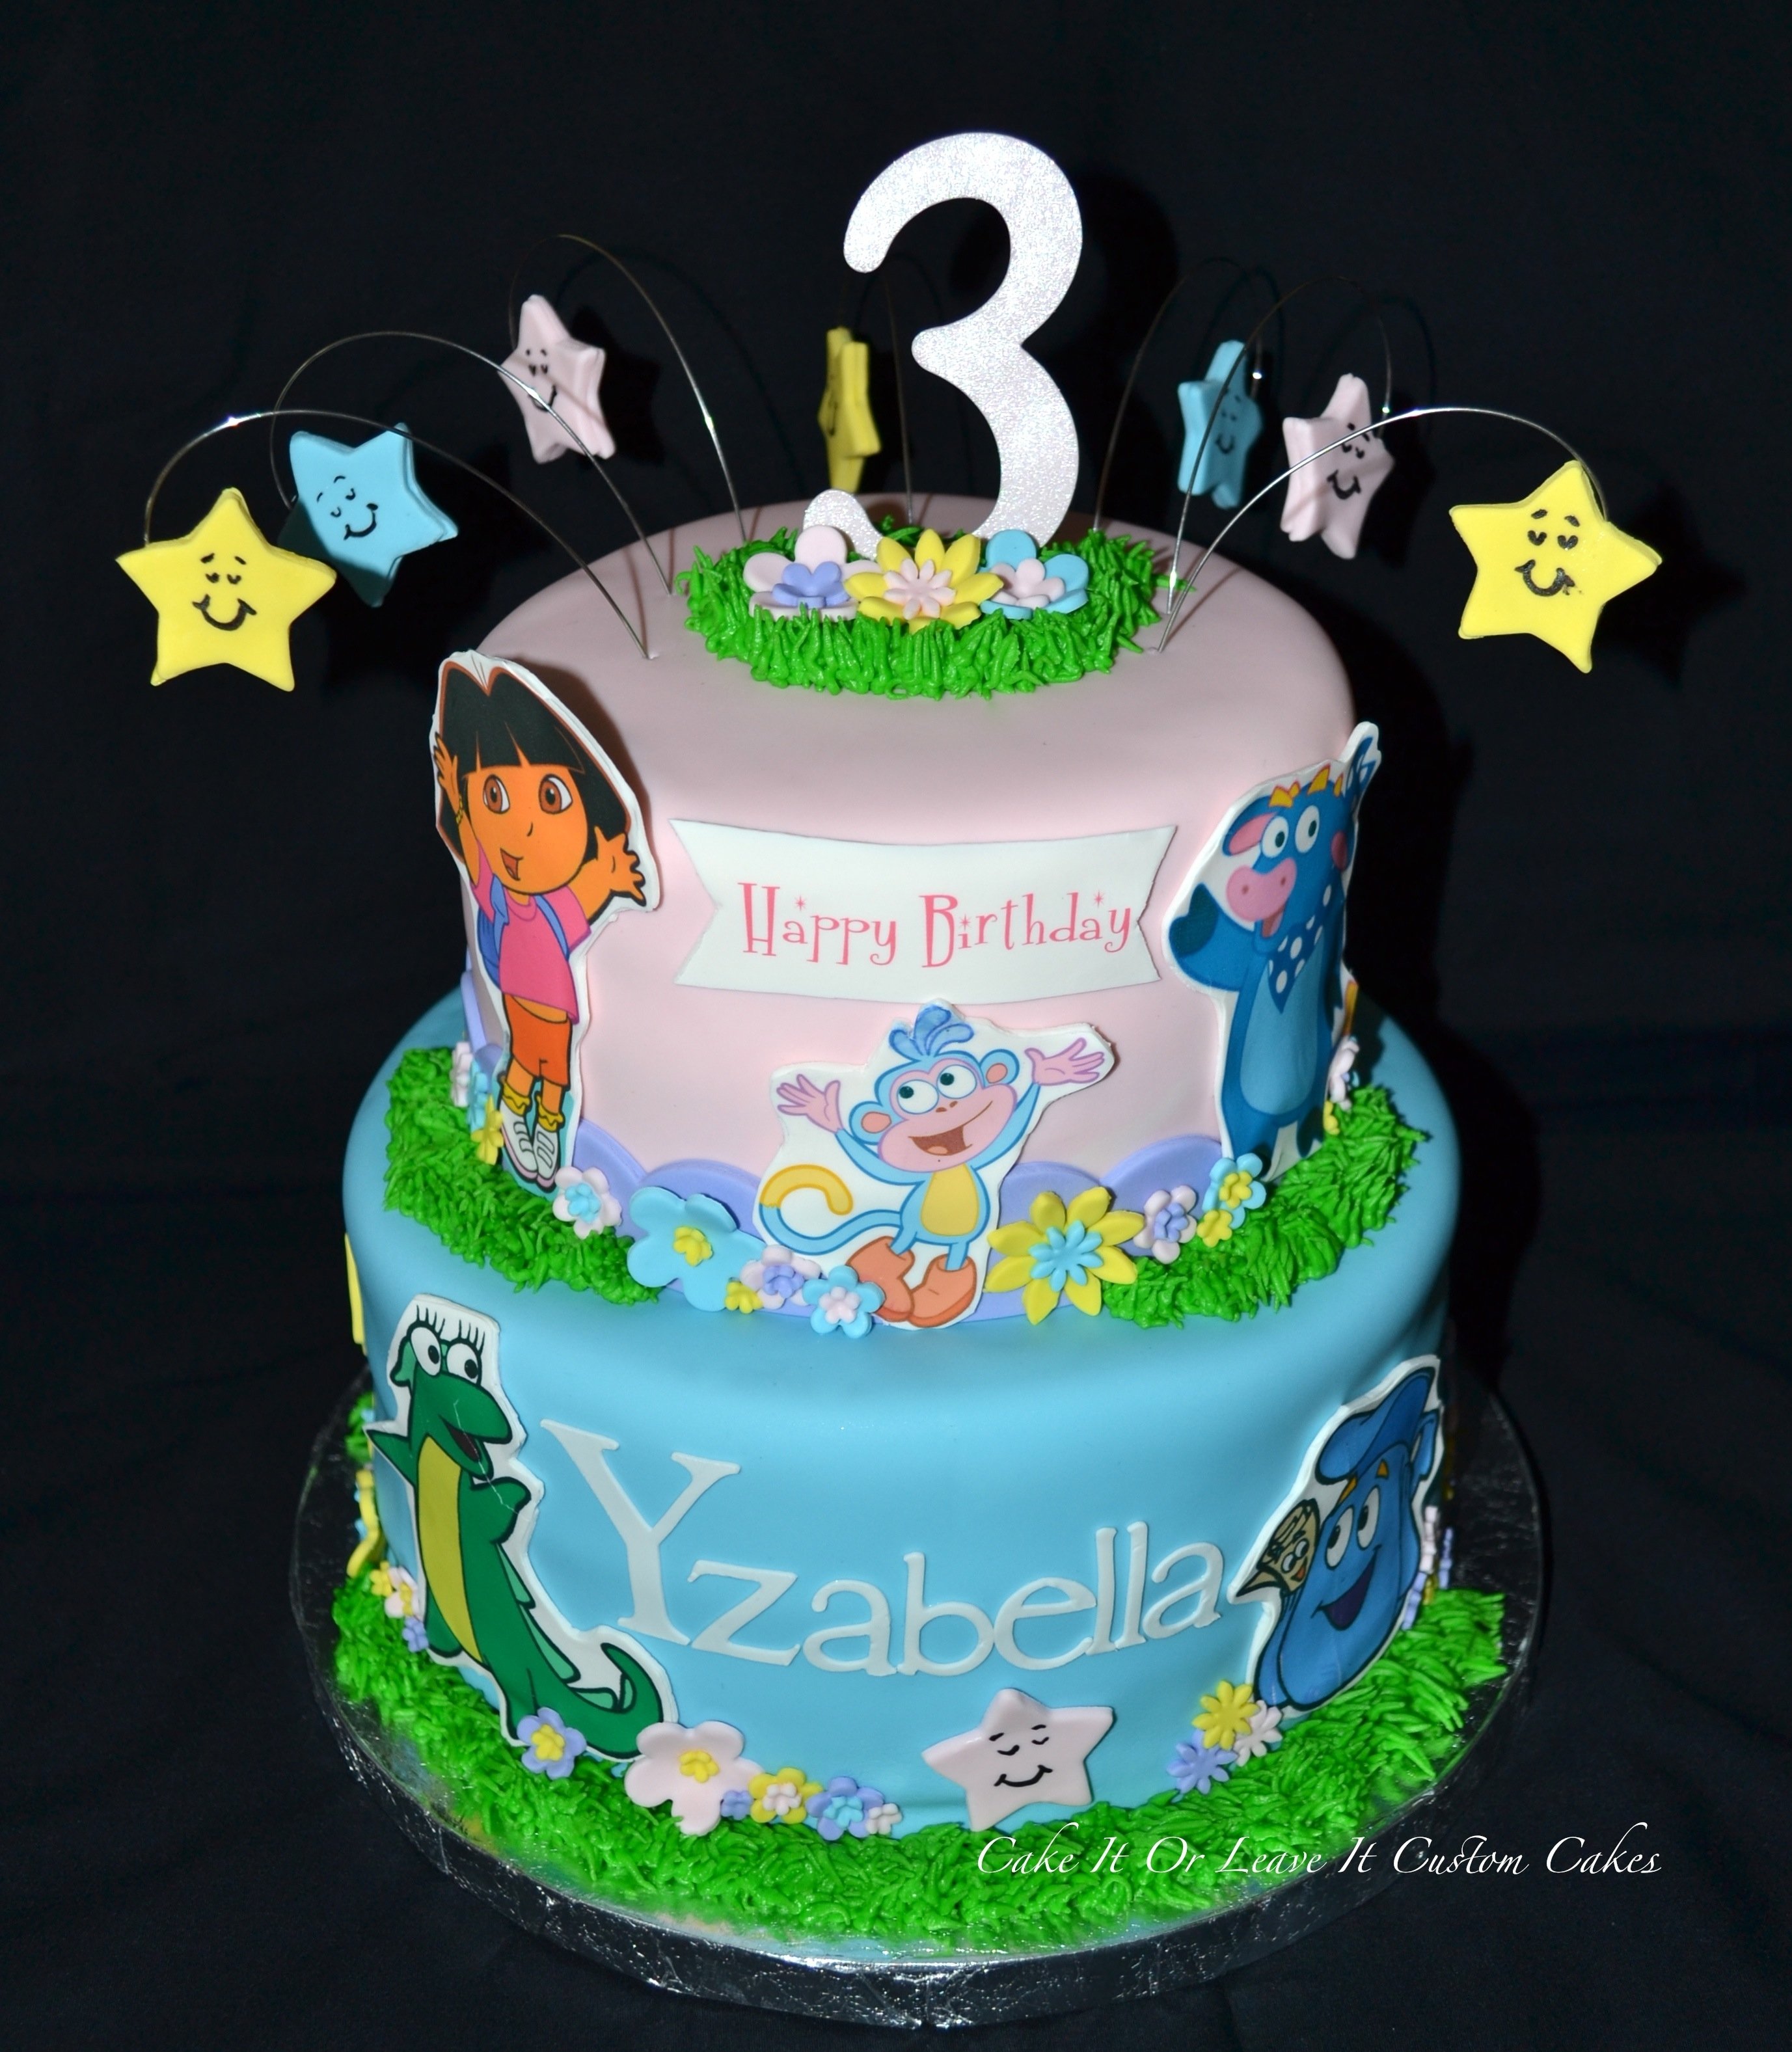 10 Awesome Dora The Explorer Cake Ideas dora cakes decoration ideas little birthday cakes 1 2022